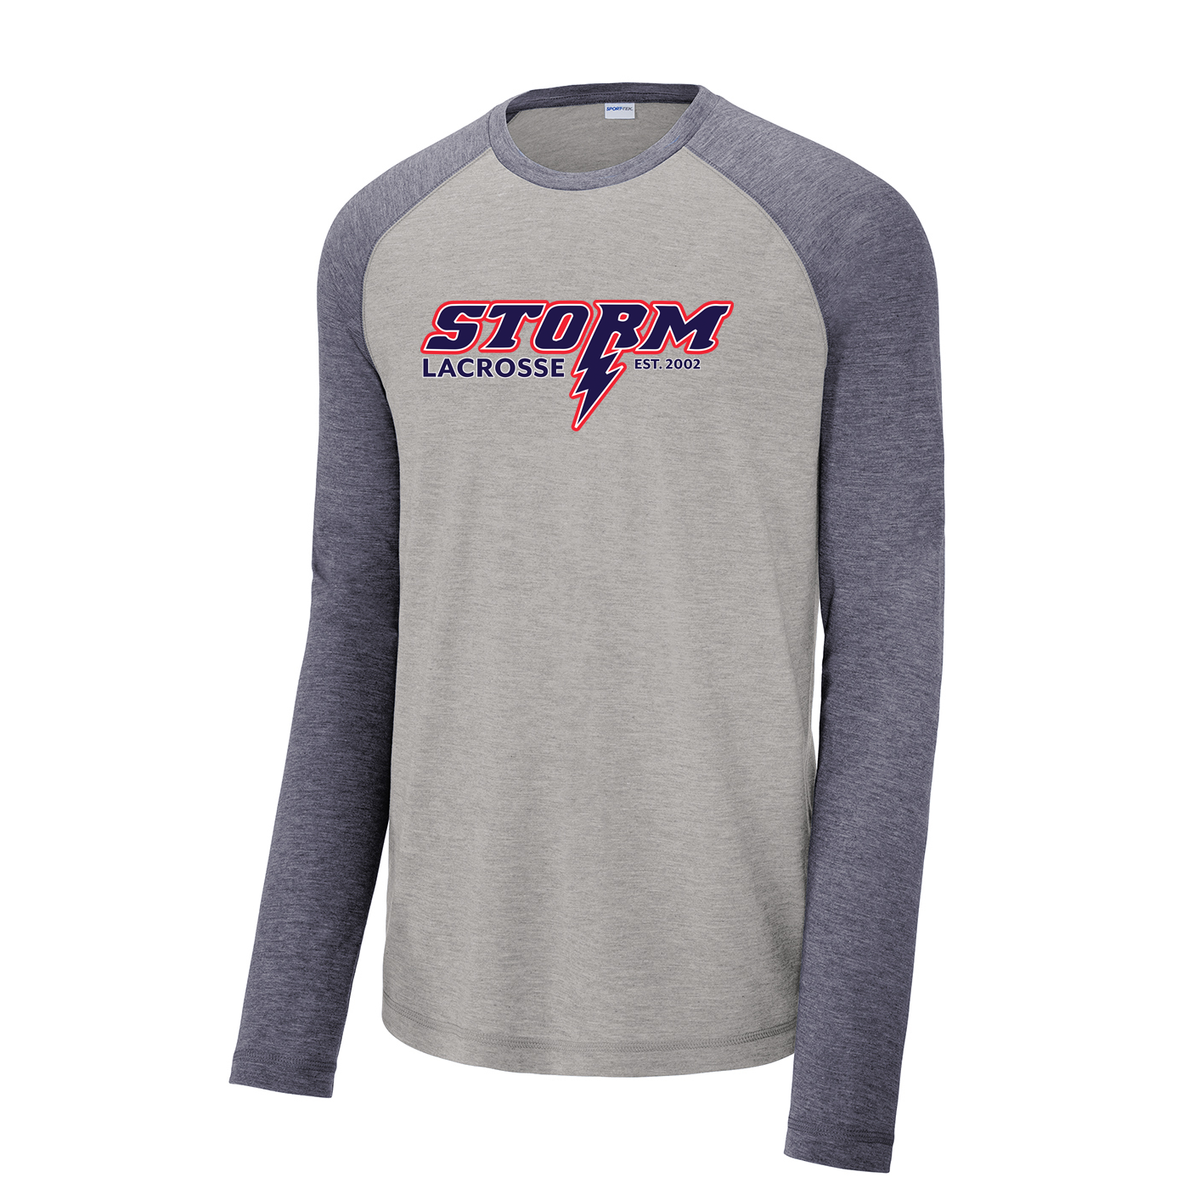 Storm Lacrosse Long Sleeve Raglan CottonTouch